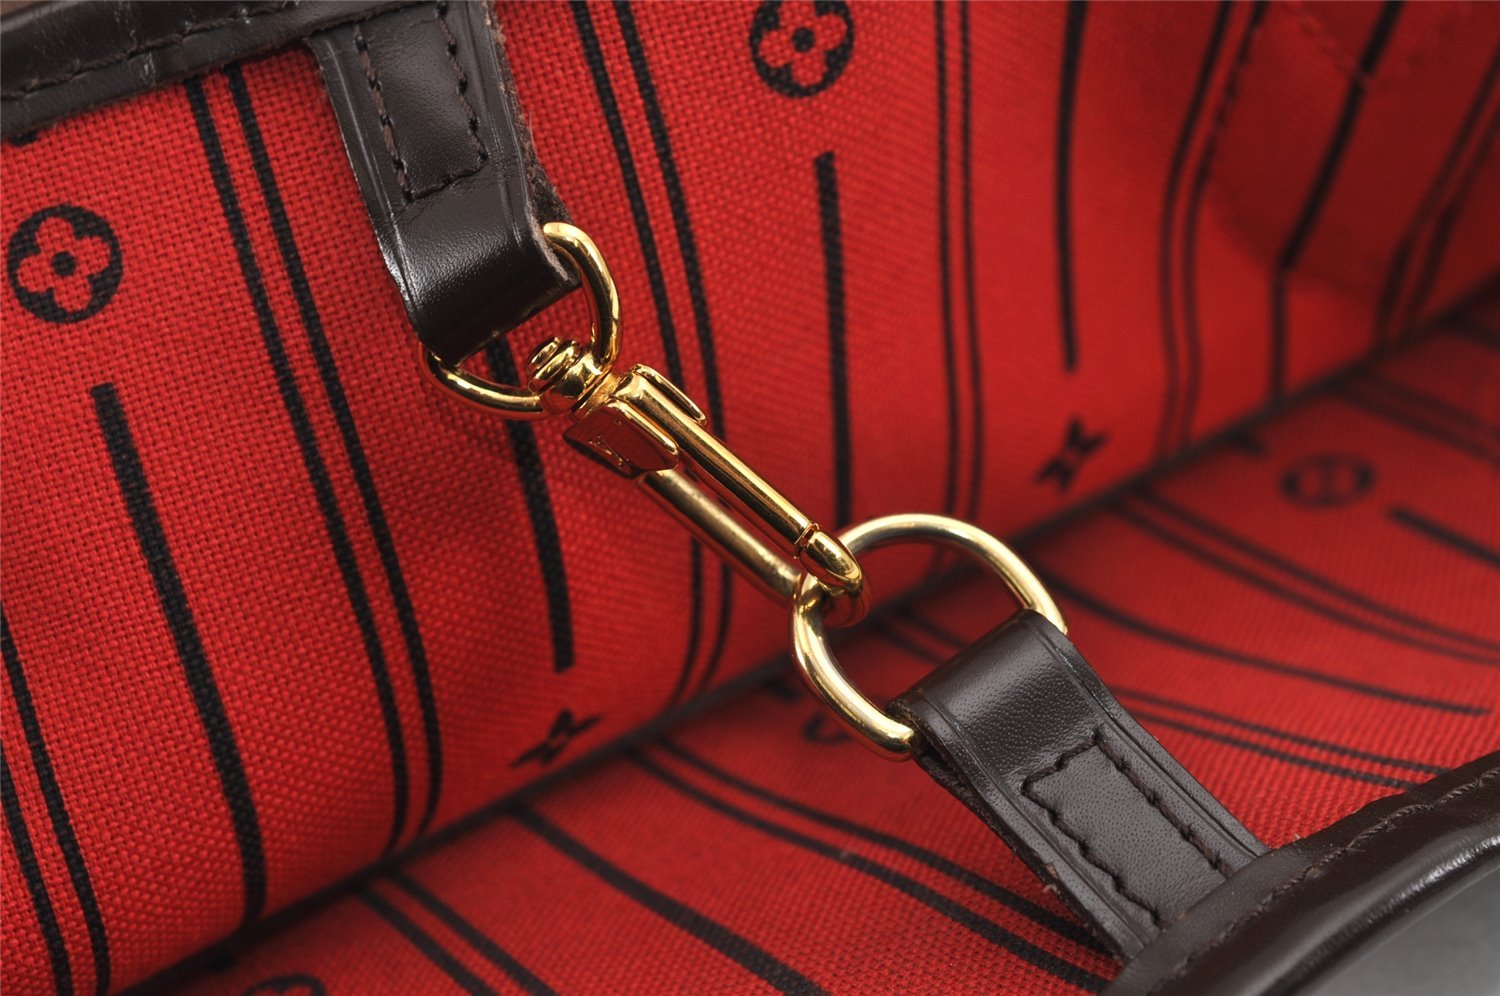 Authentic Louis Vuitton Damier Neverfull MM Shoulder Tote Bag N51105 LV 2875J